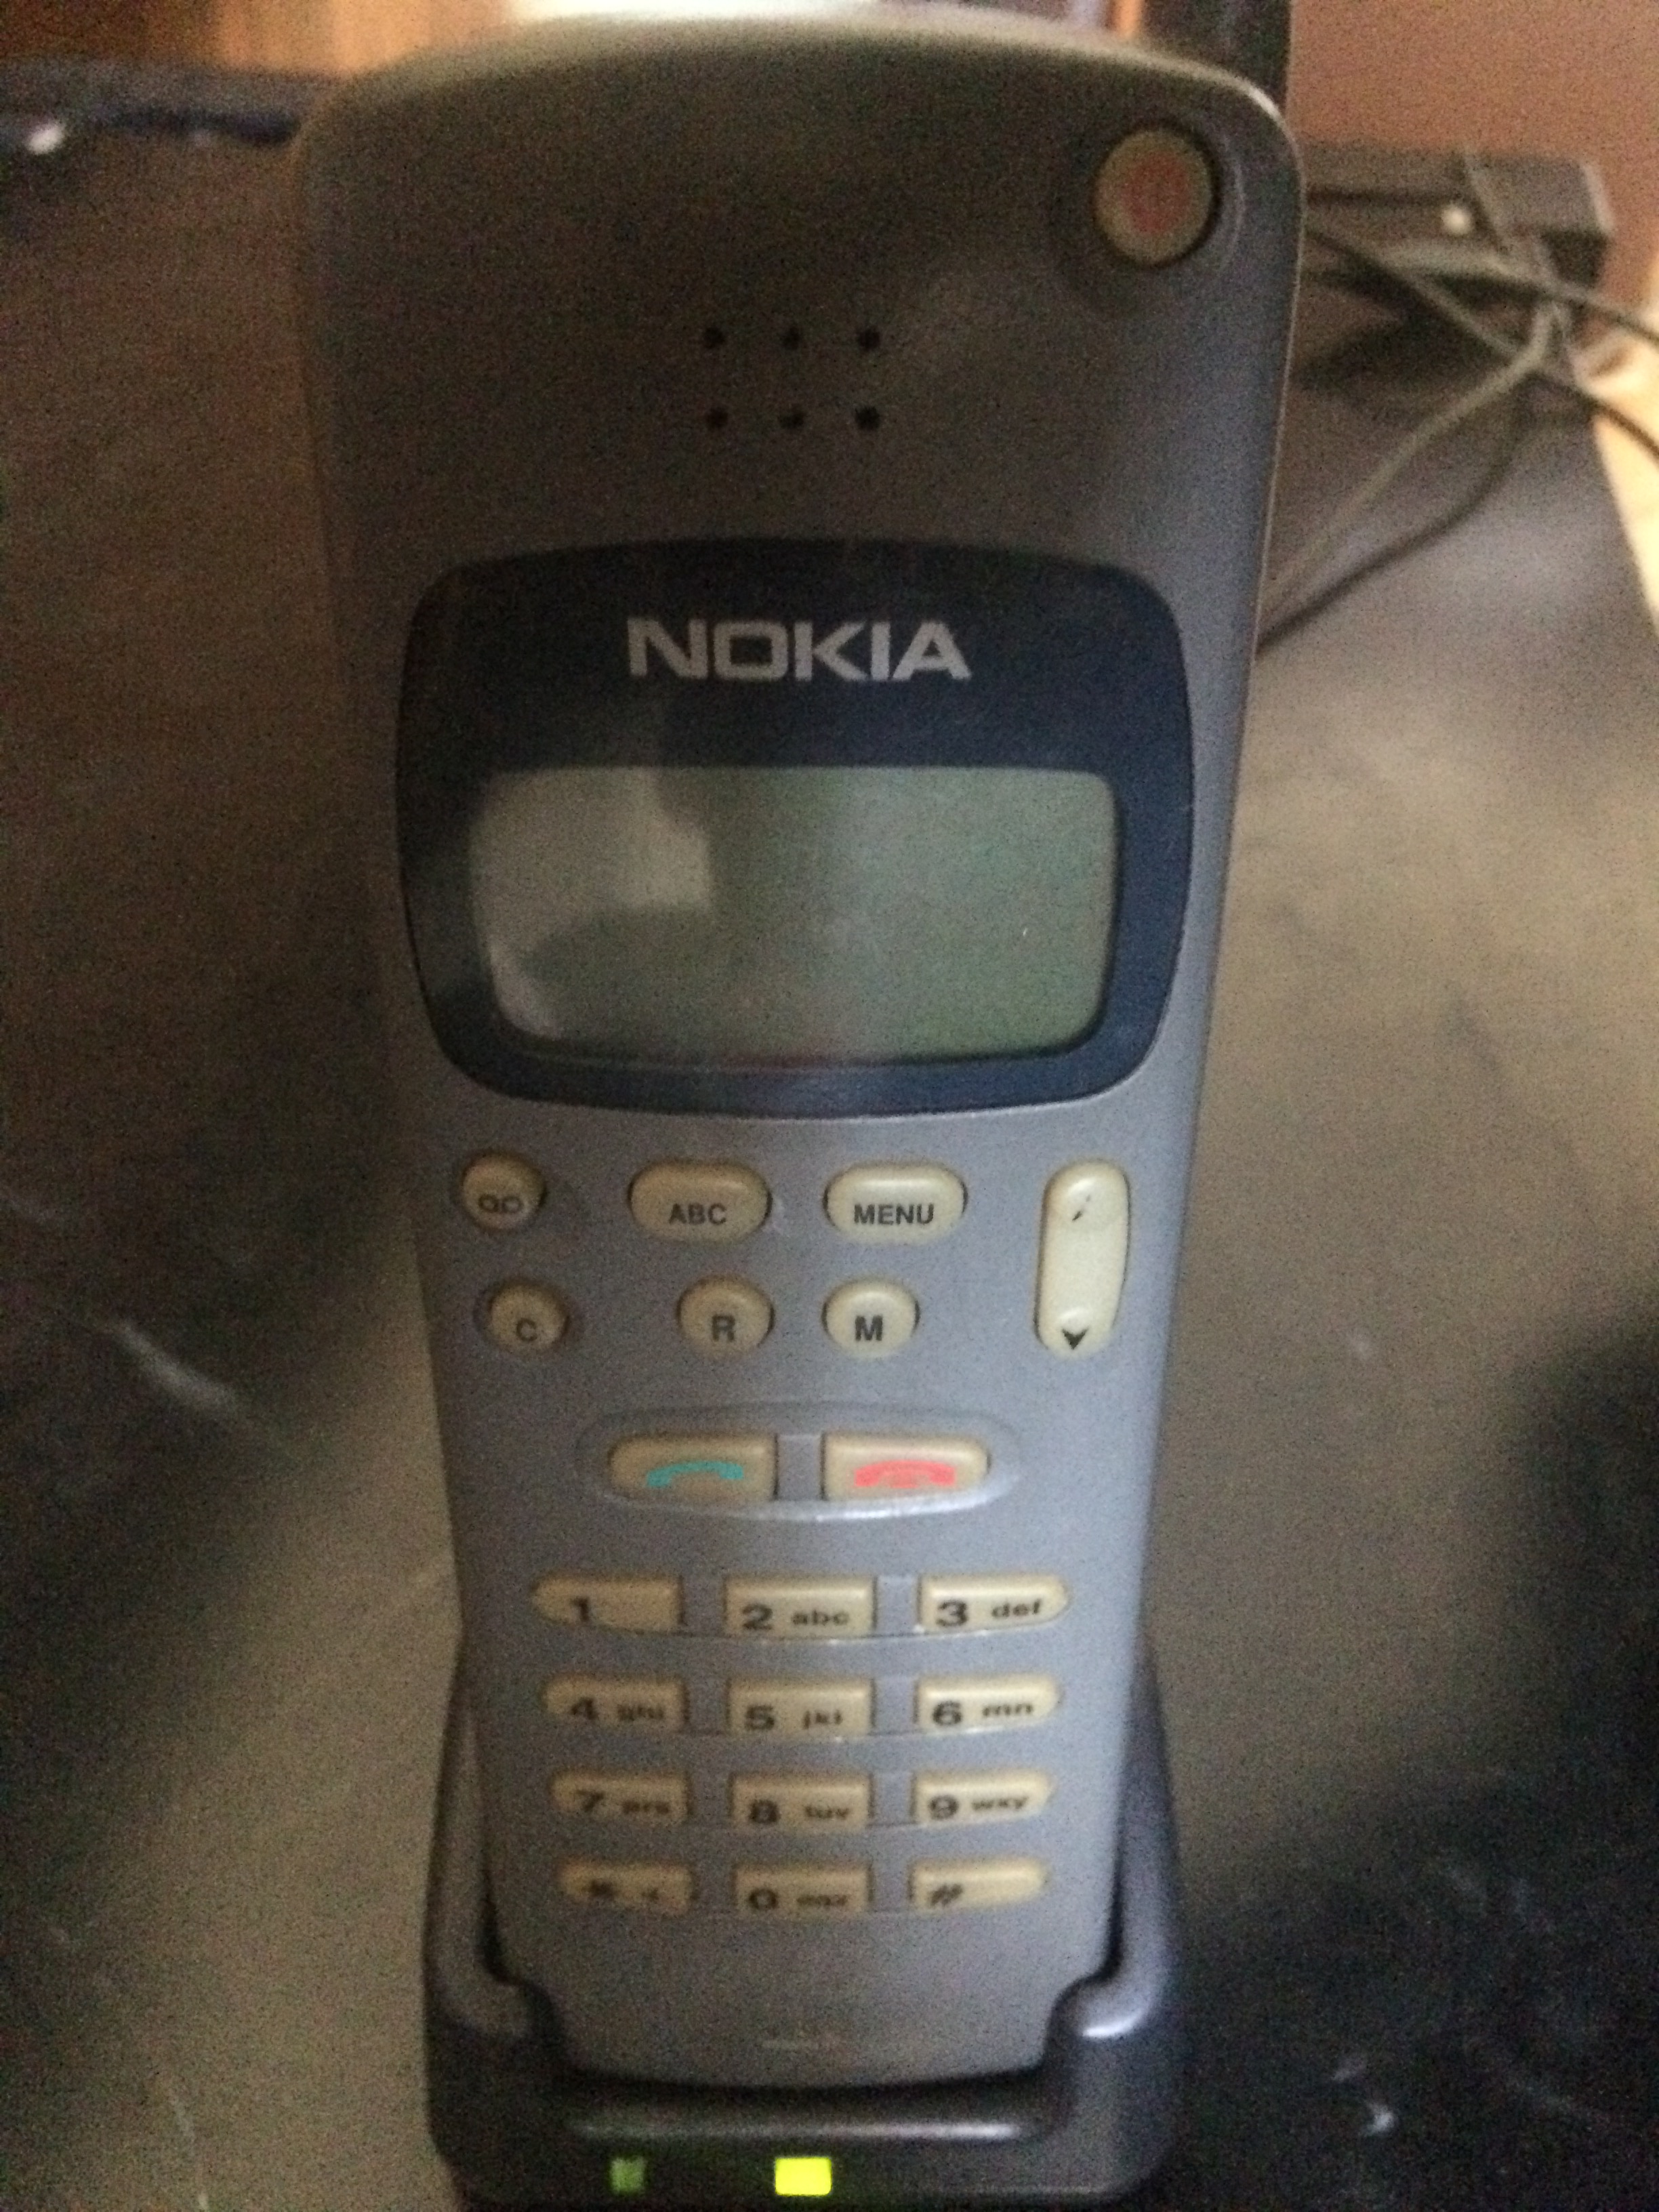 Nokia is charging